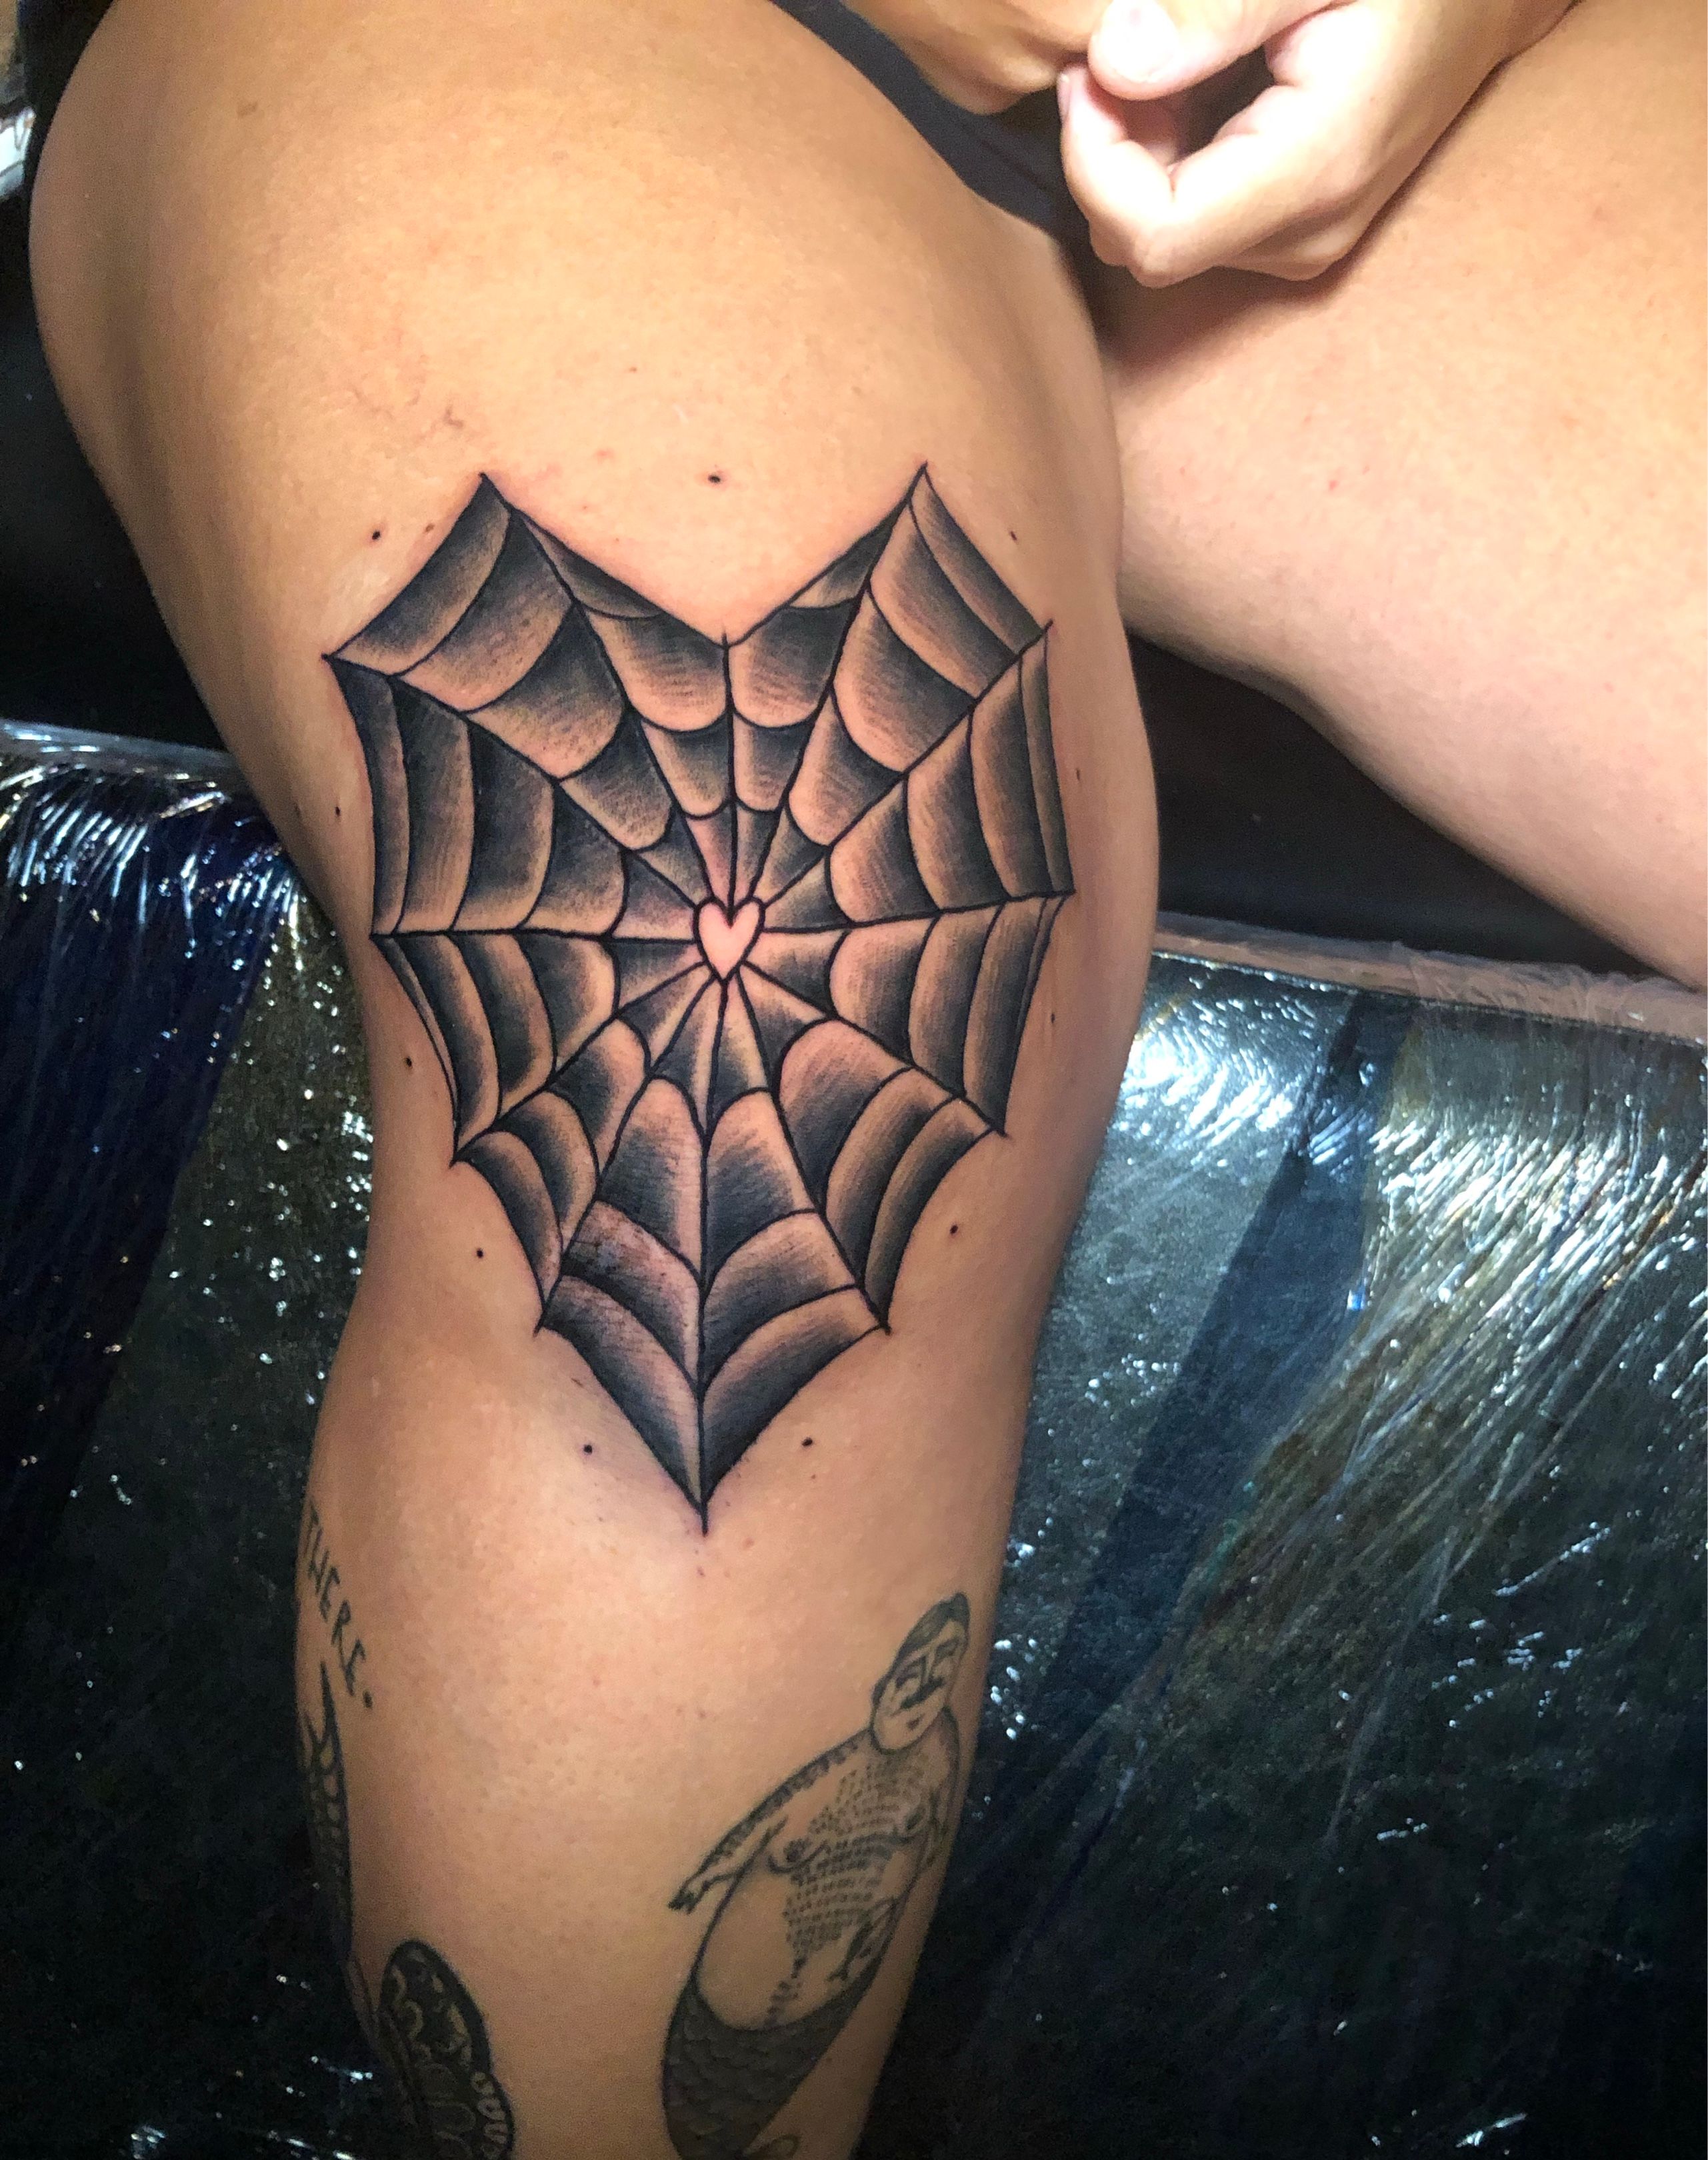 101 Amazing Spider Web Tattoo Ideas That Will Blow Your Mind  Outsons   Mens Fashion Tips And Style Guide   Tatuagens no cotovelo Tatuagem de  aranha Tatuagem